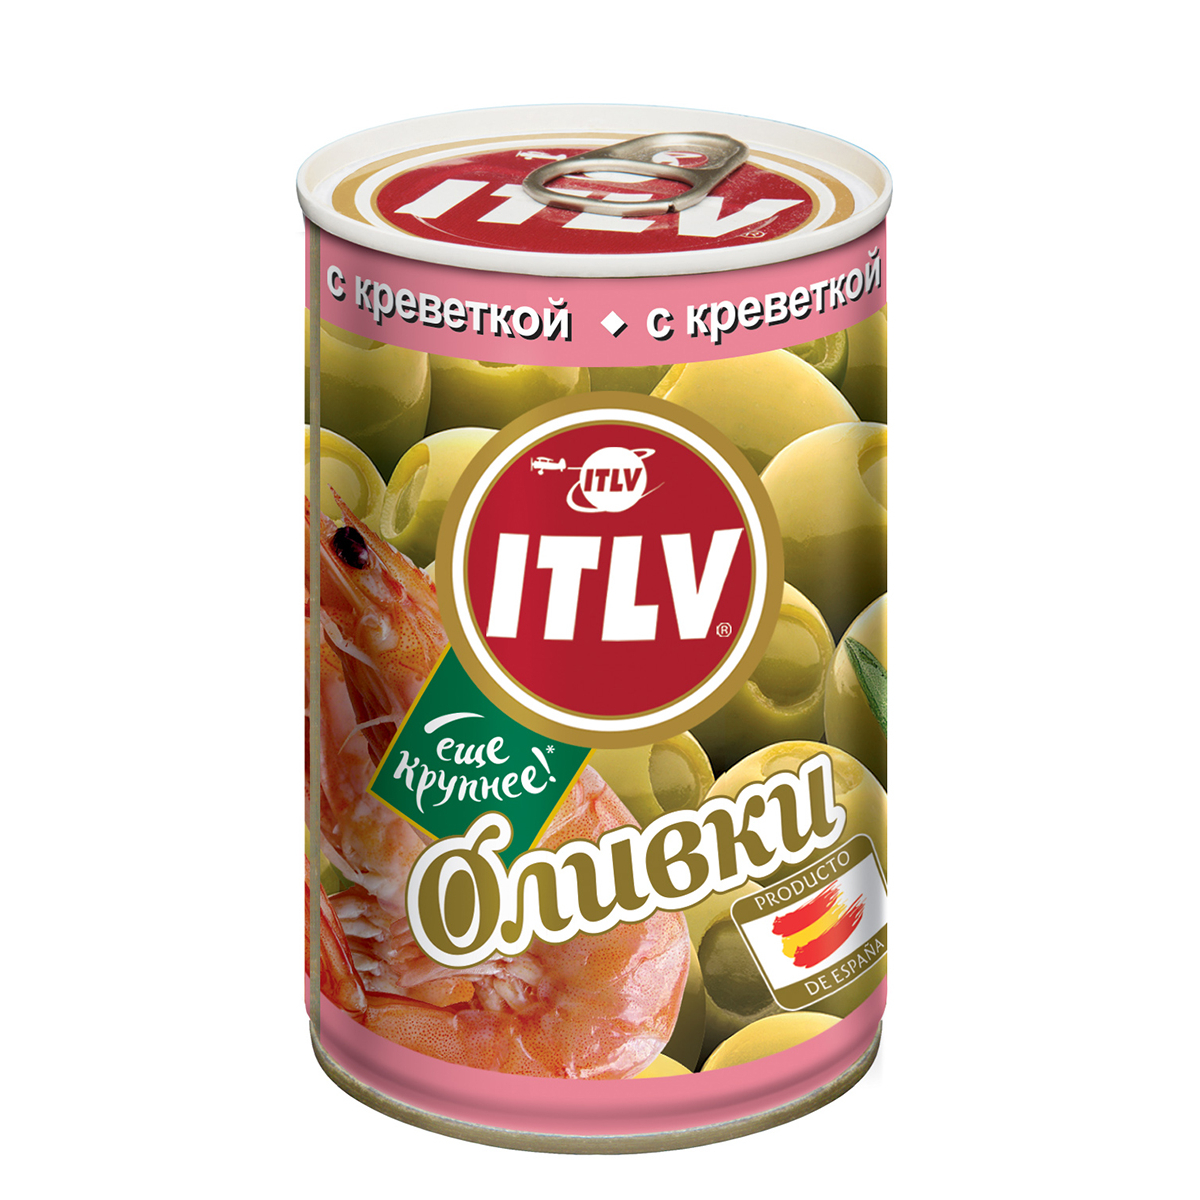 Оливки ITLV с креветками 314 мл оливки зеленые itlv с креветками 314 мл